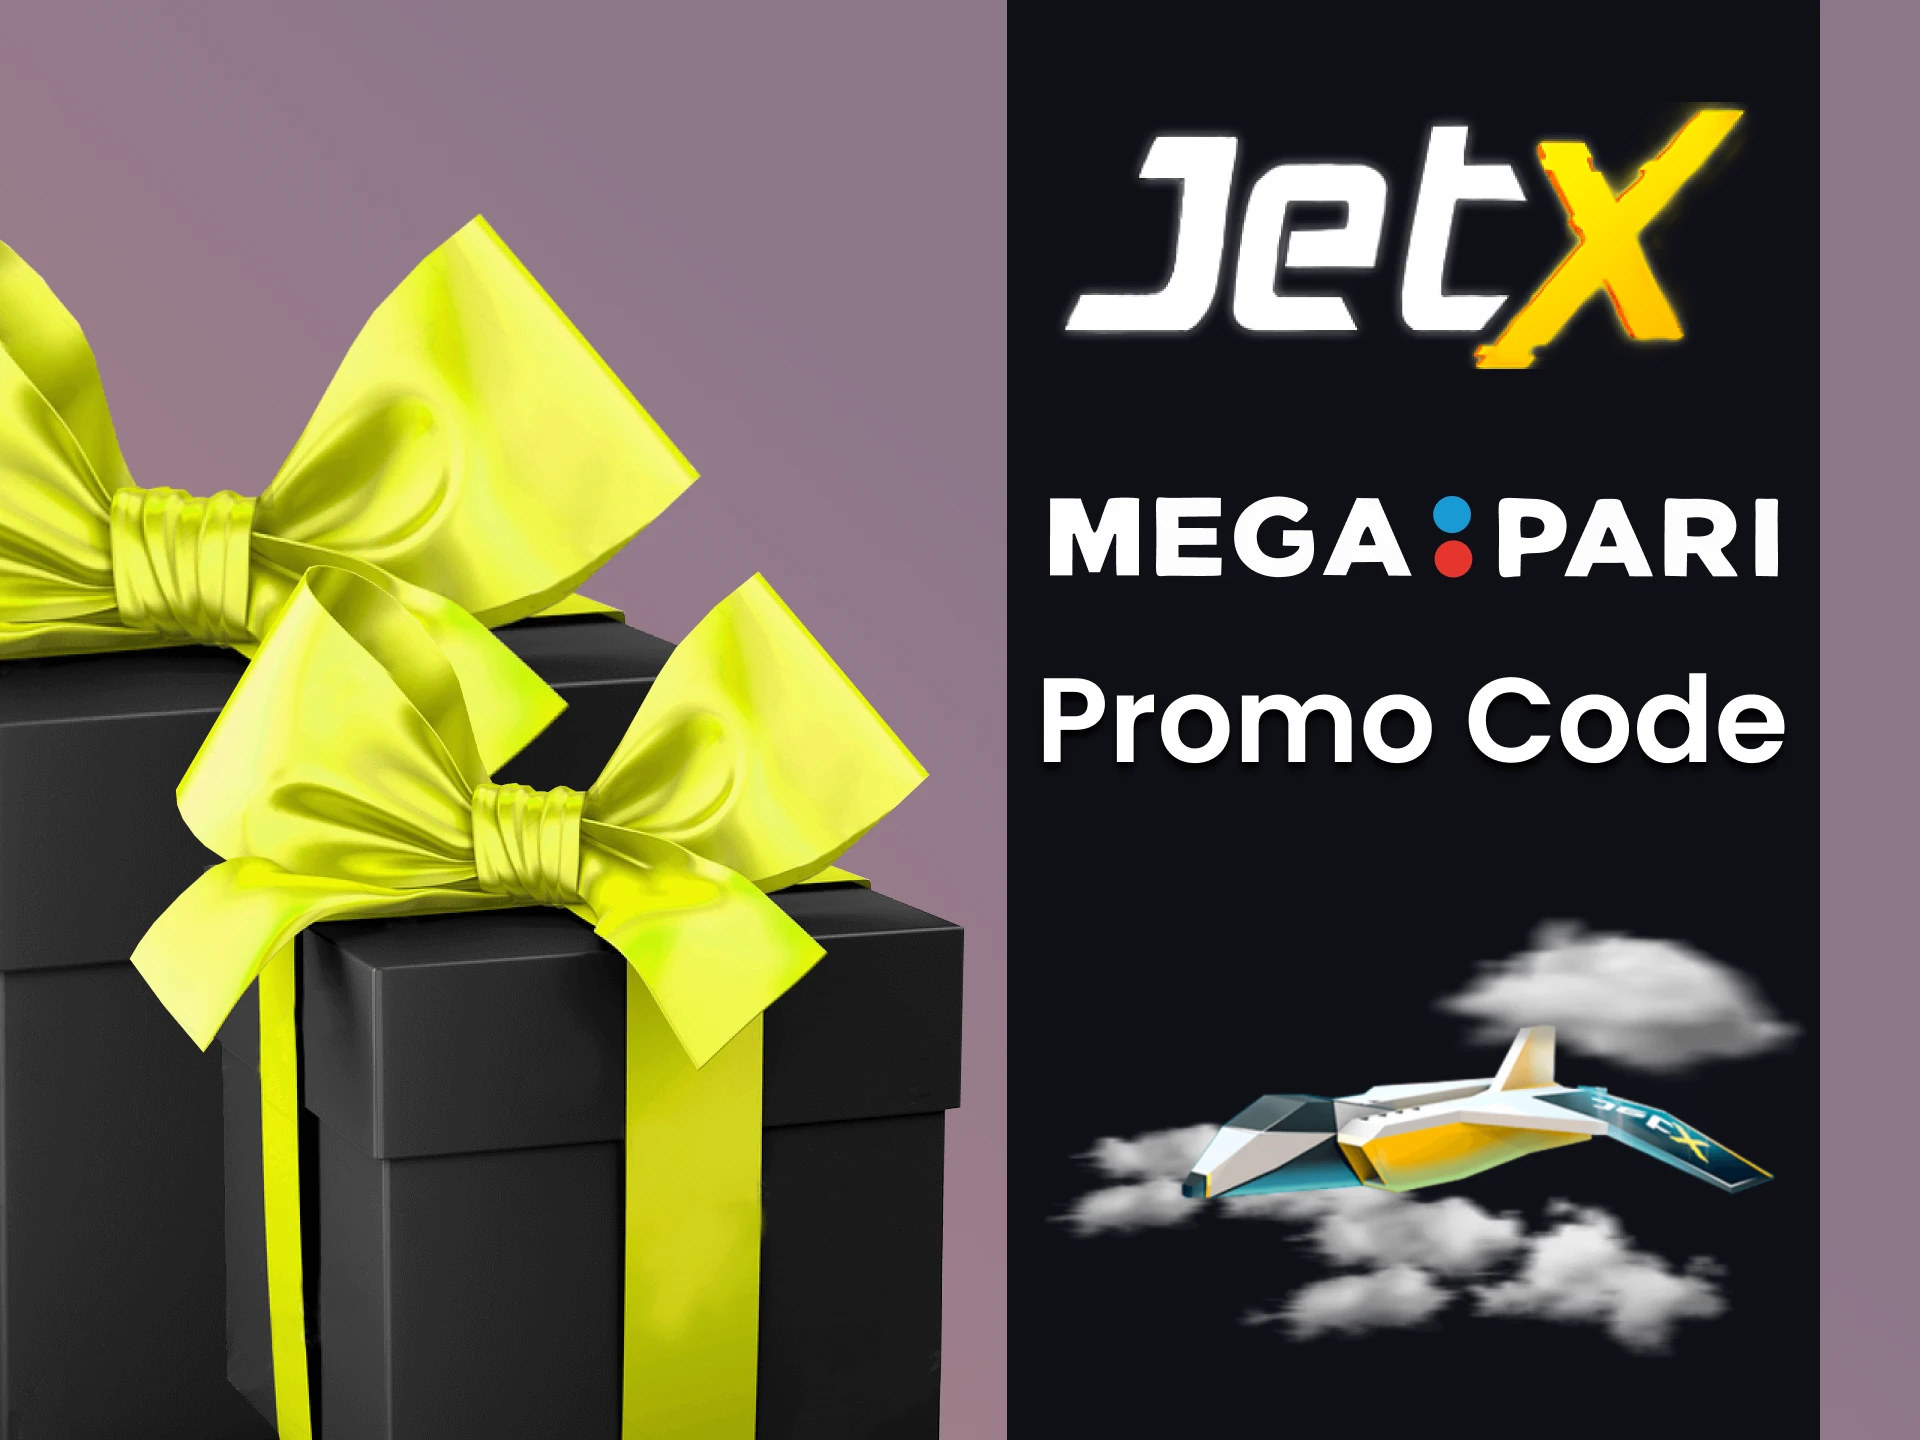 Megapari has a promo code for JetX.